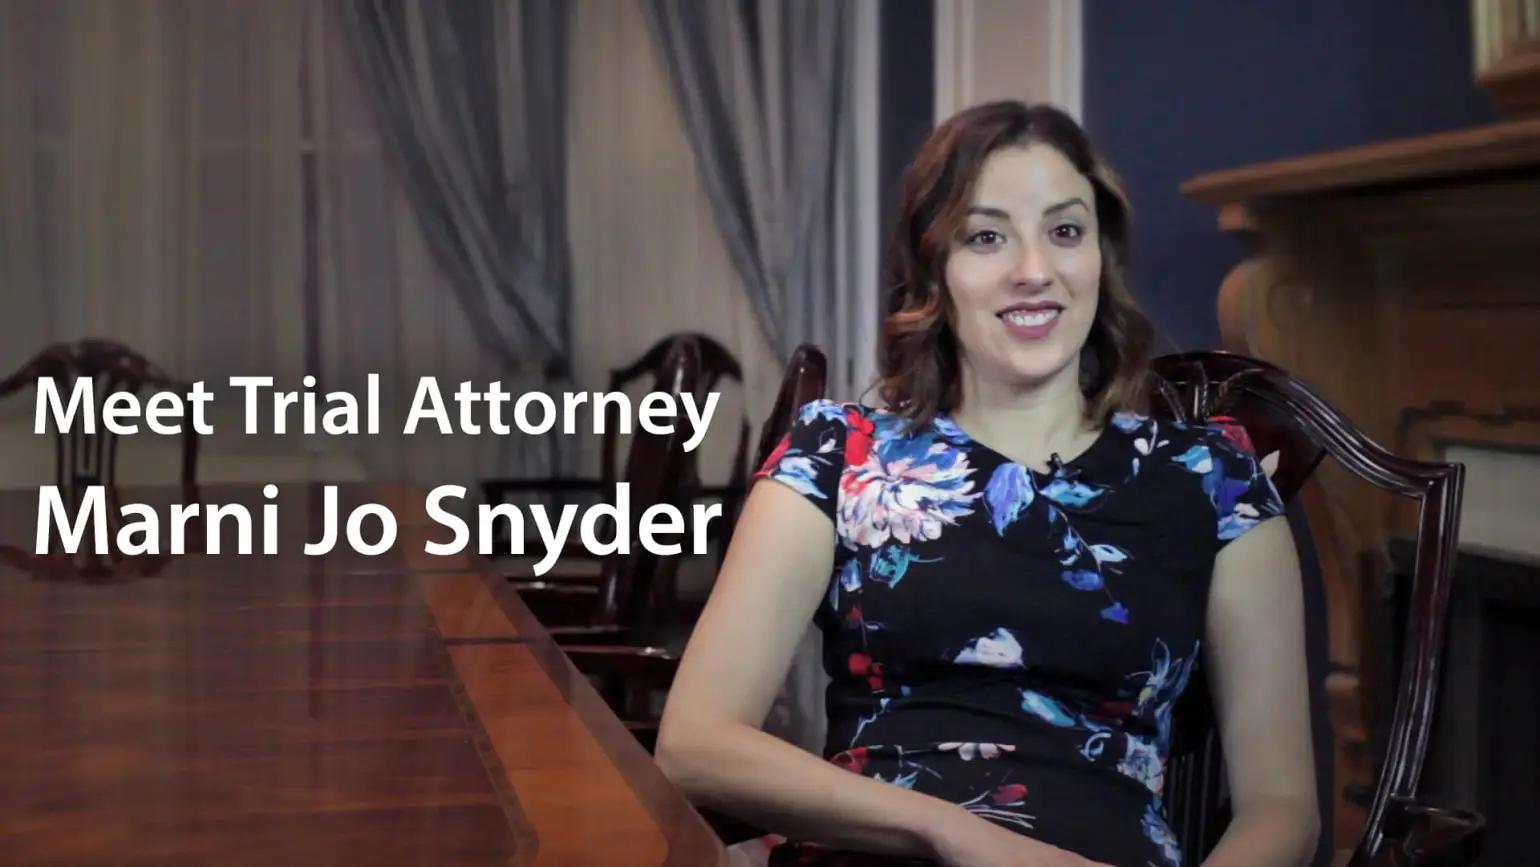 Meet Trial Attorney Marni Jo Snyder